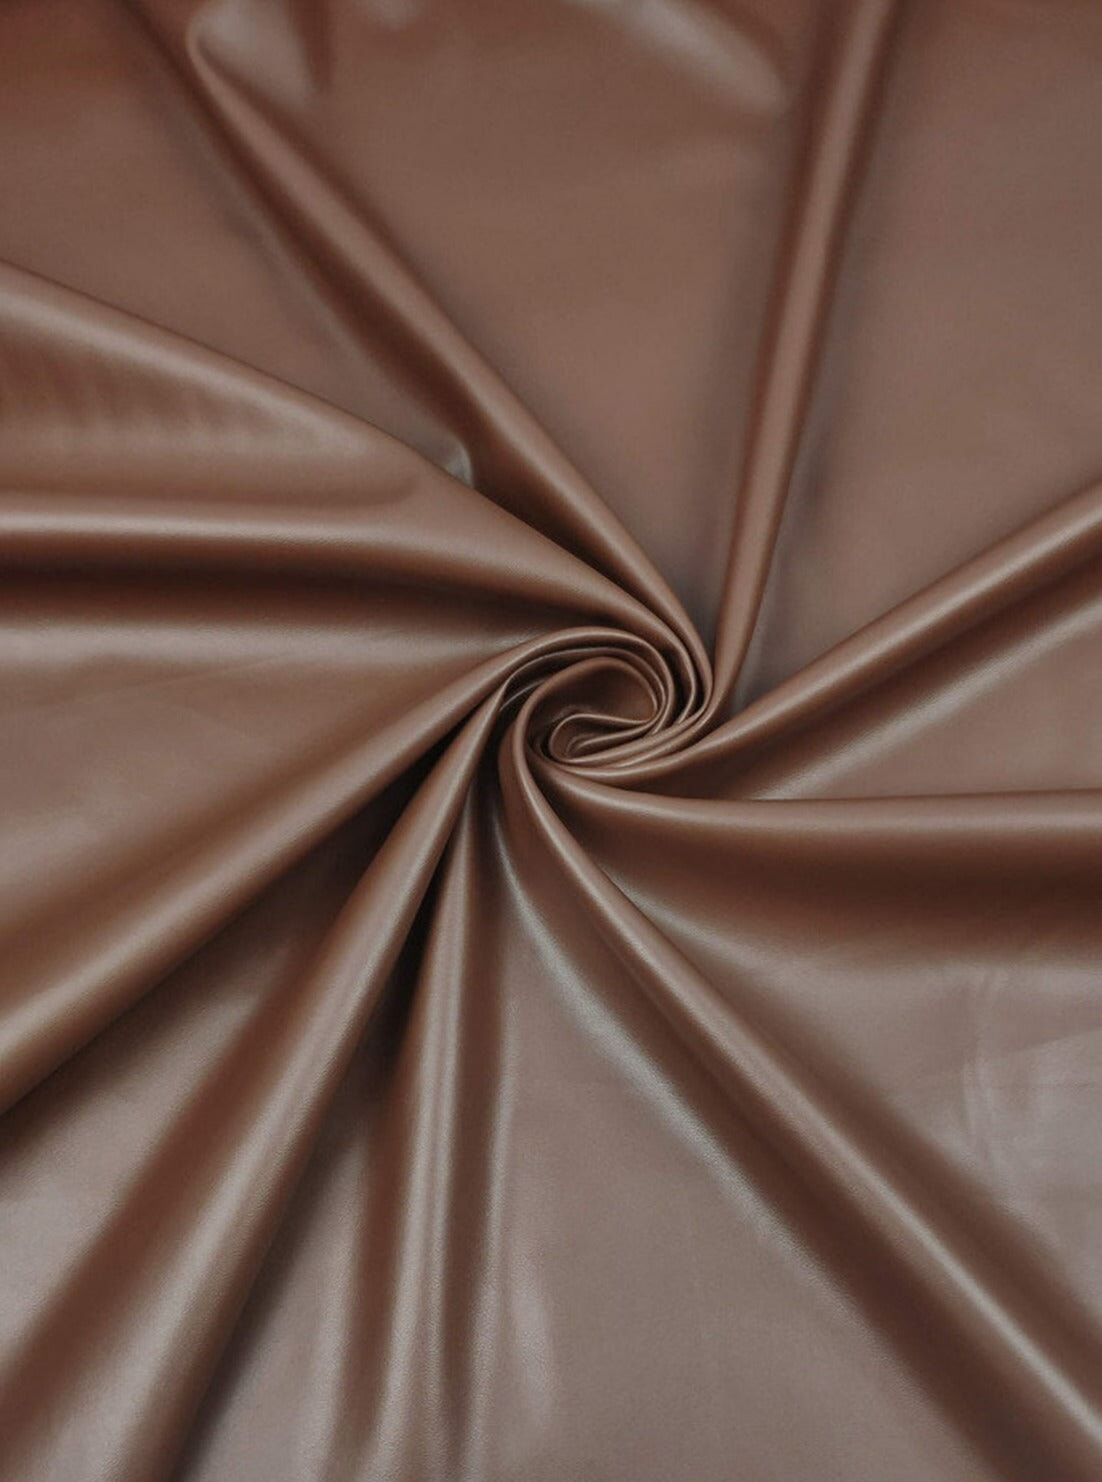 Shop now Chocolate Stretch Faux Leather by Yard- Kiki Textiles